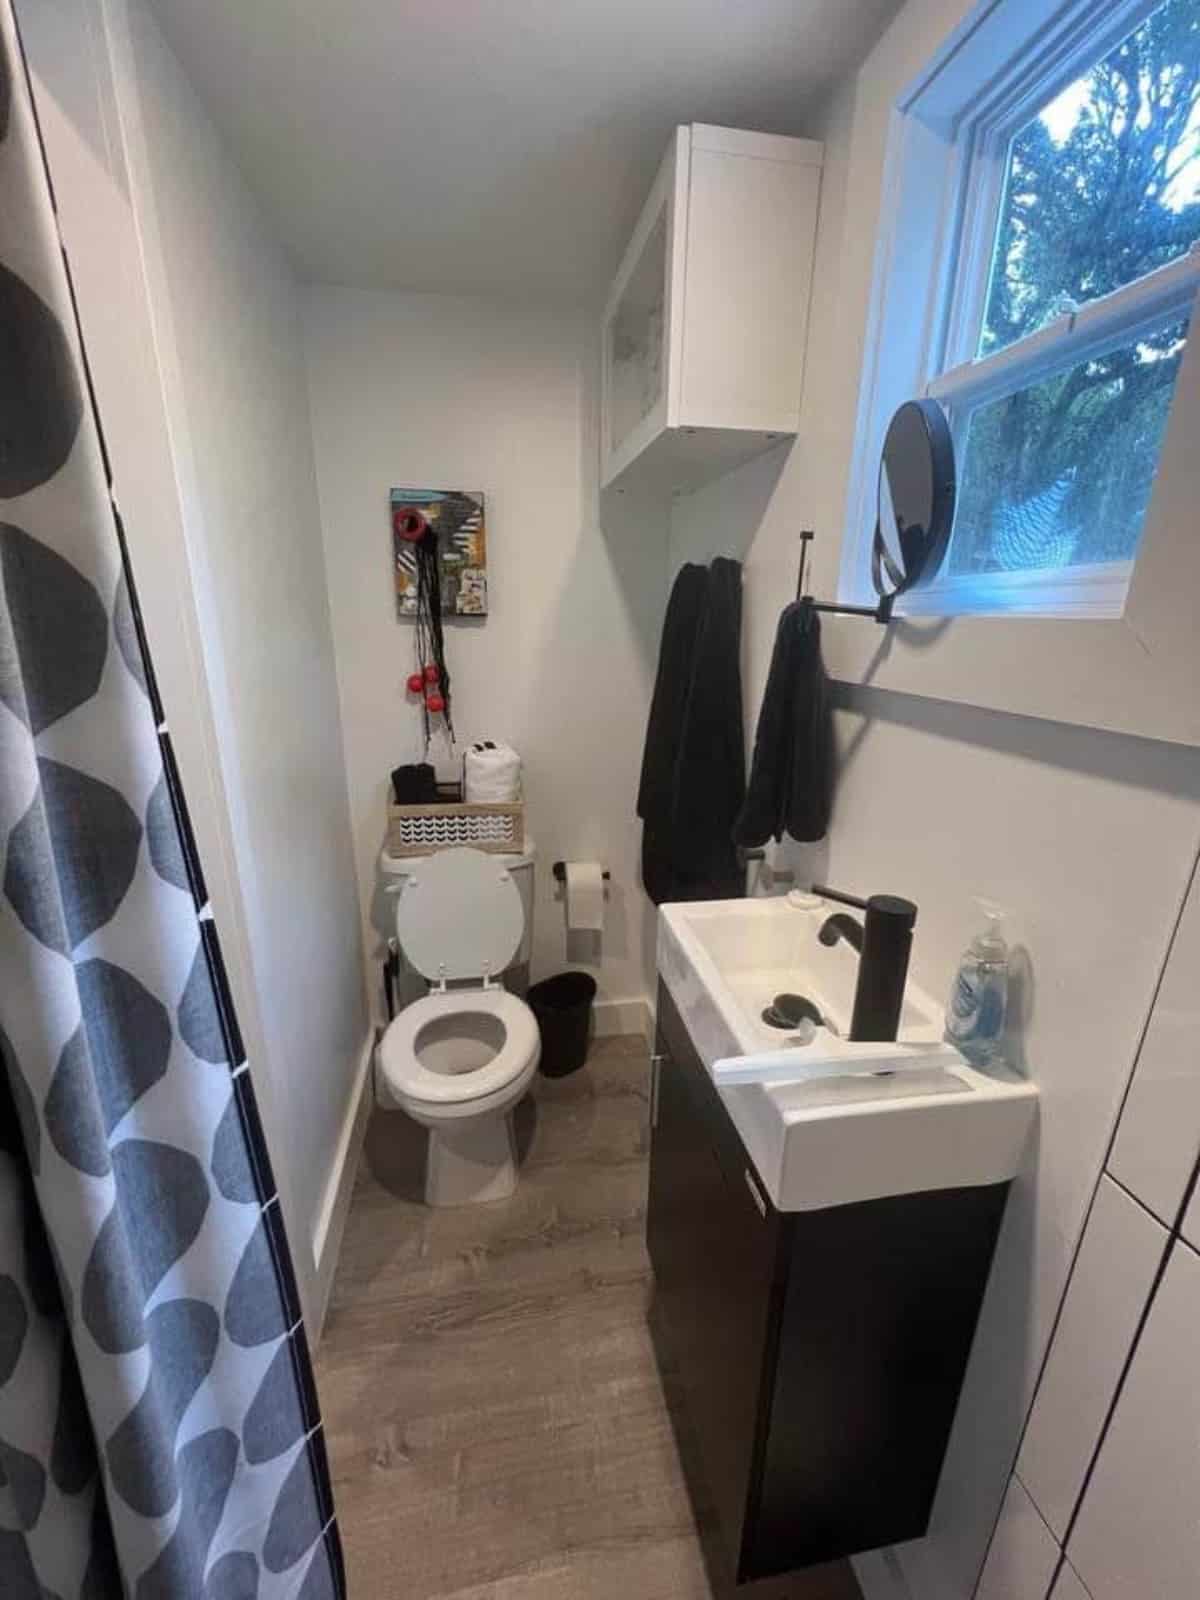 Sink with vanity & mirror with standard toilet in bathroom